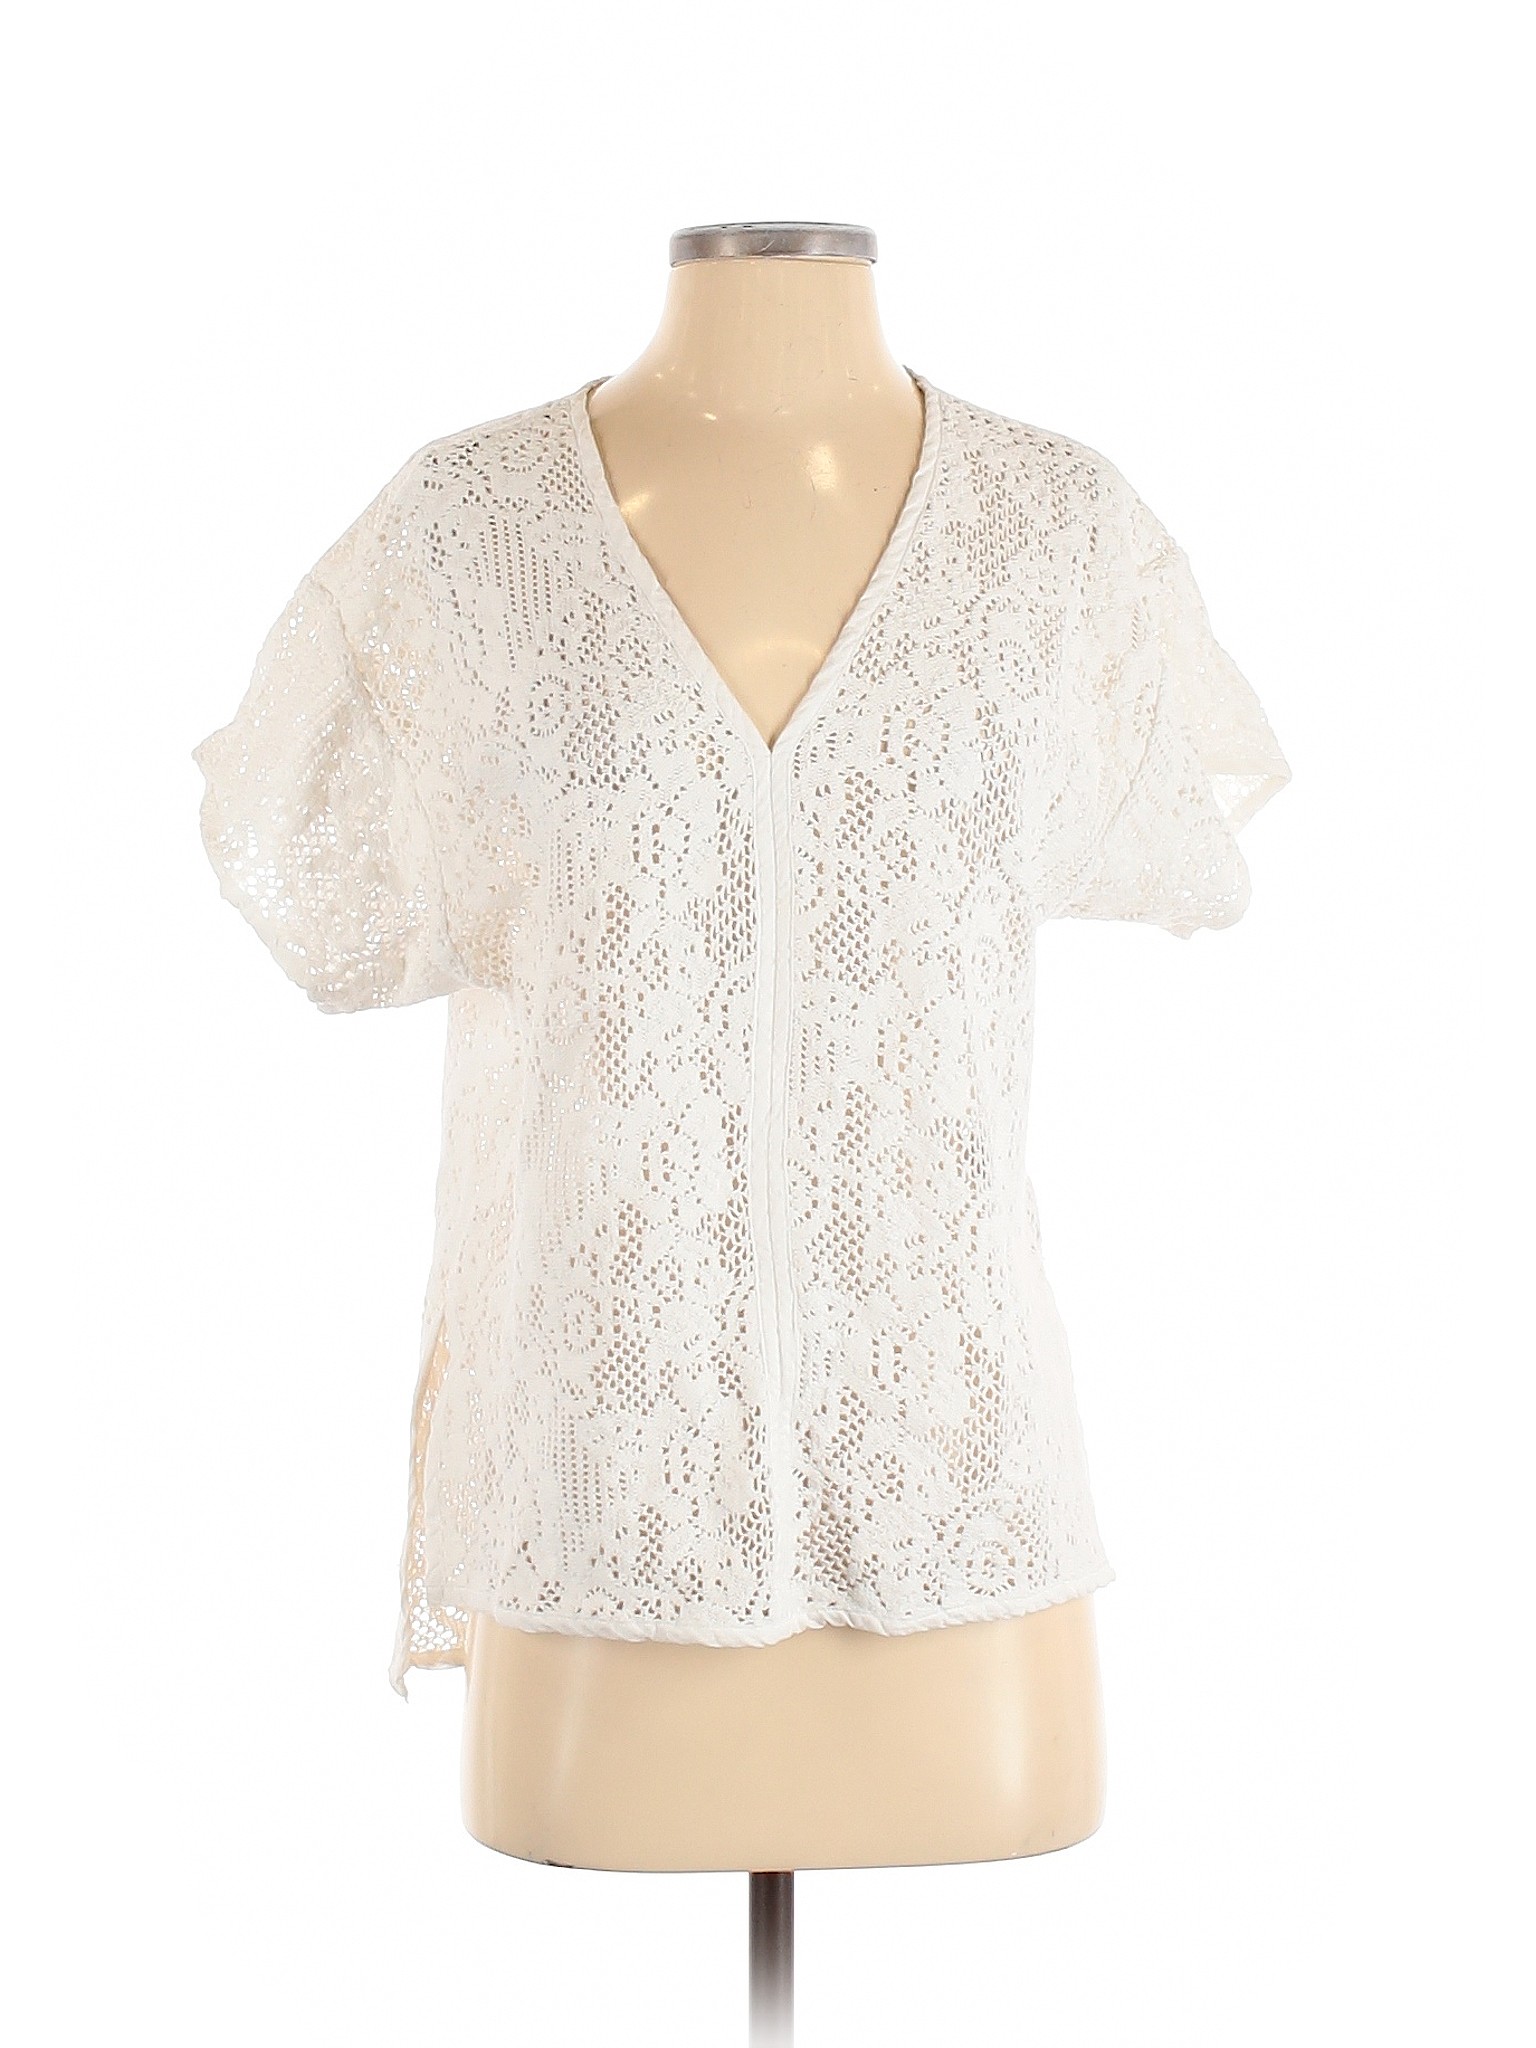 Banana Republic Women White Short Sleeve Blouse XS | eBay